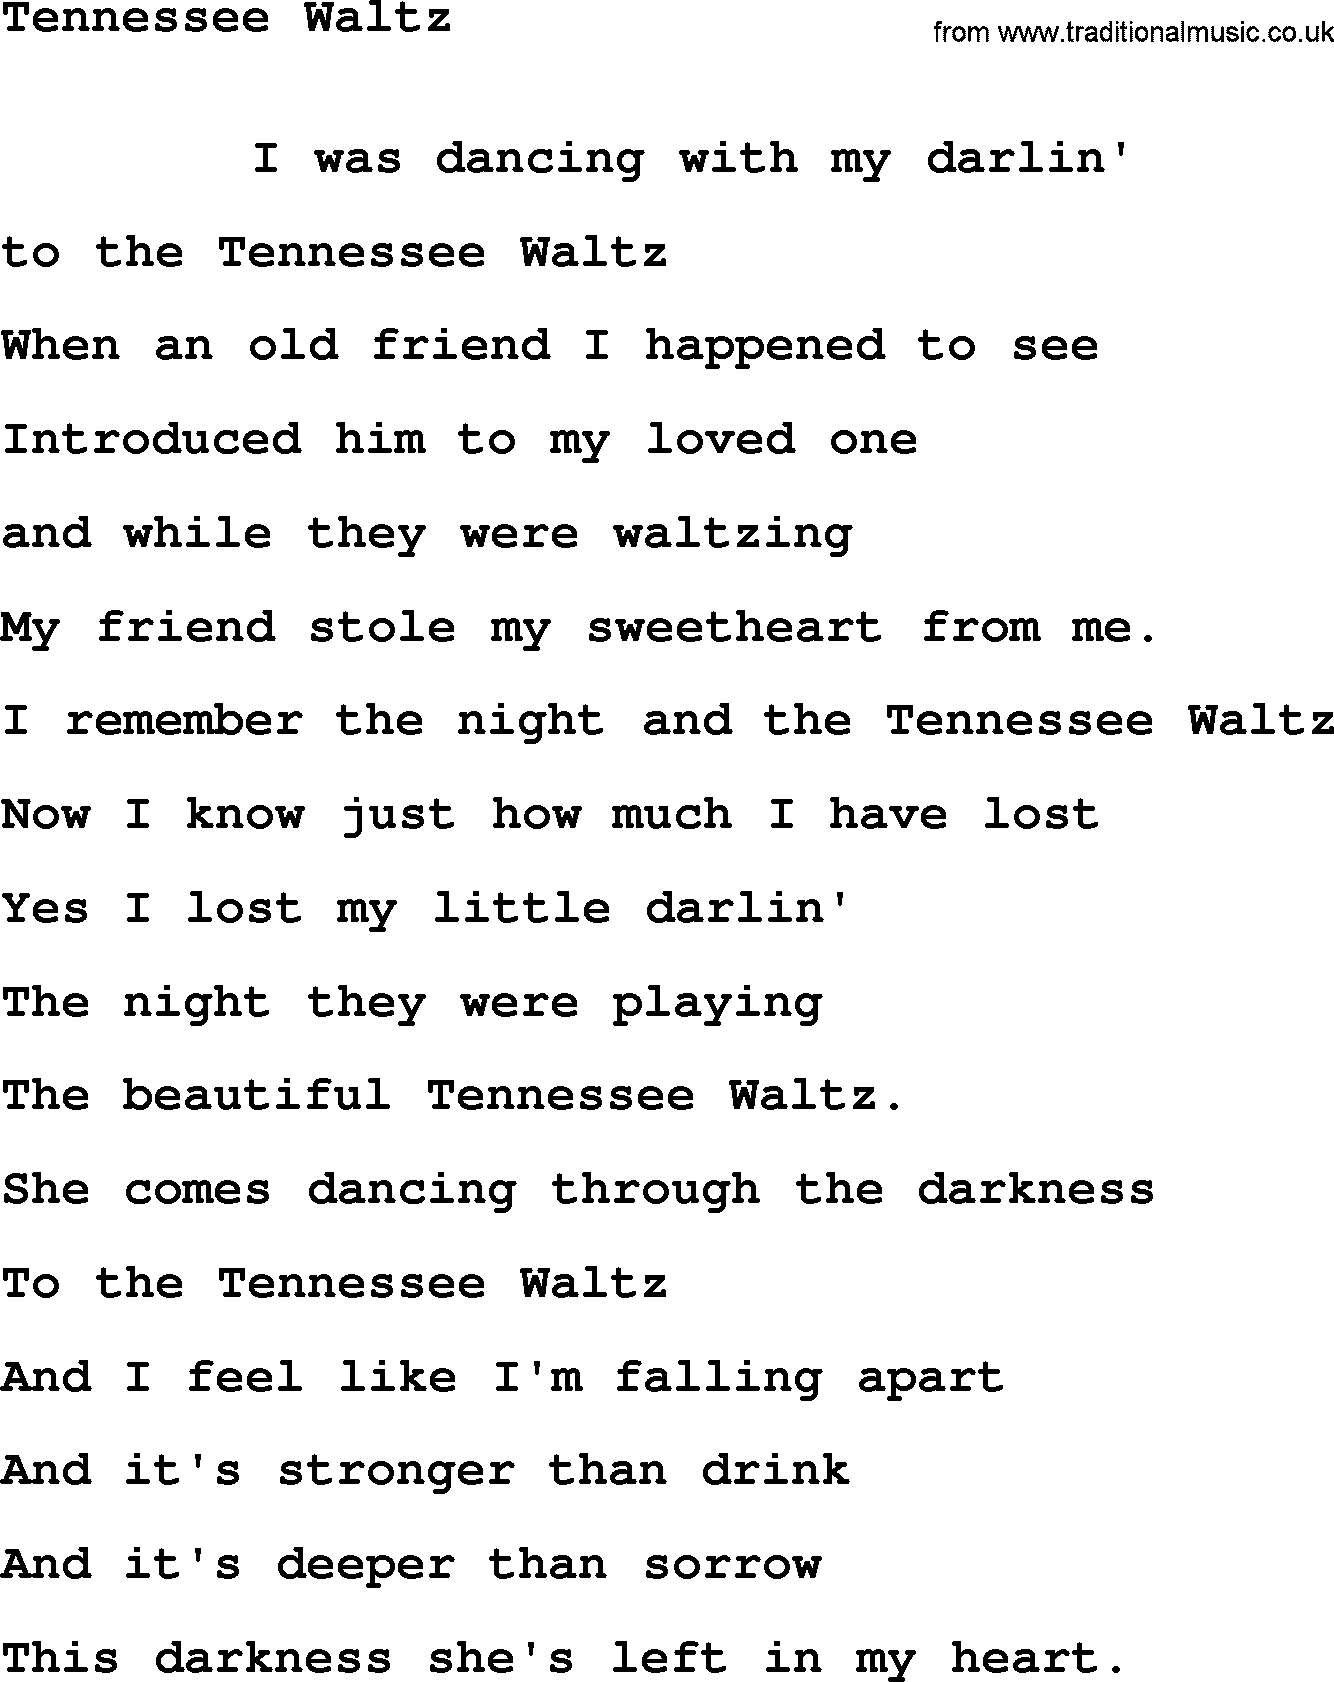 Leonard Cohen song Tennessee Waltz-leonard-cohen.txt lyrics